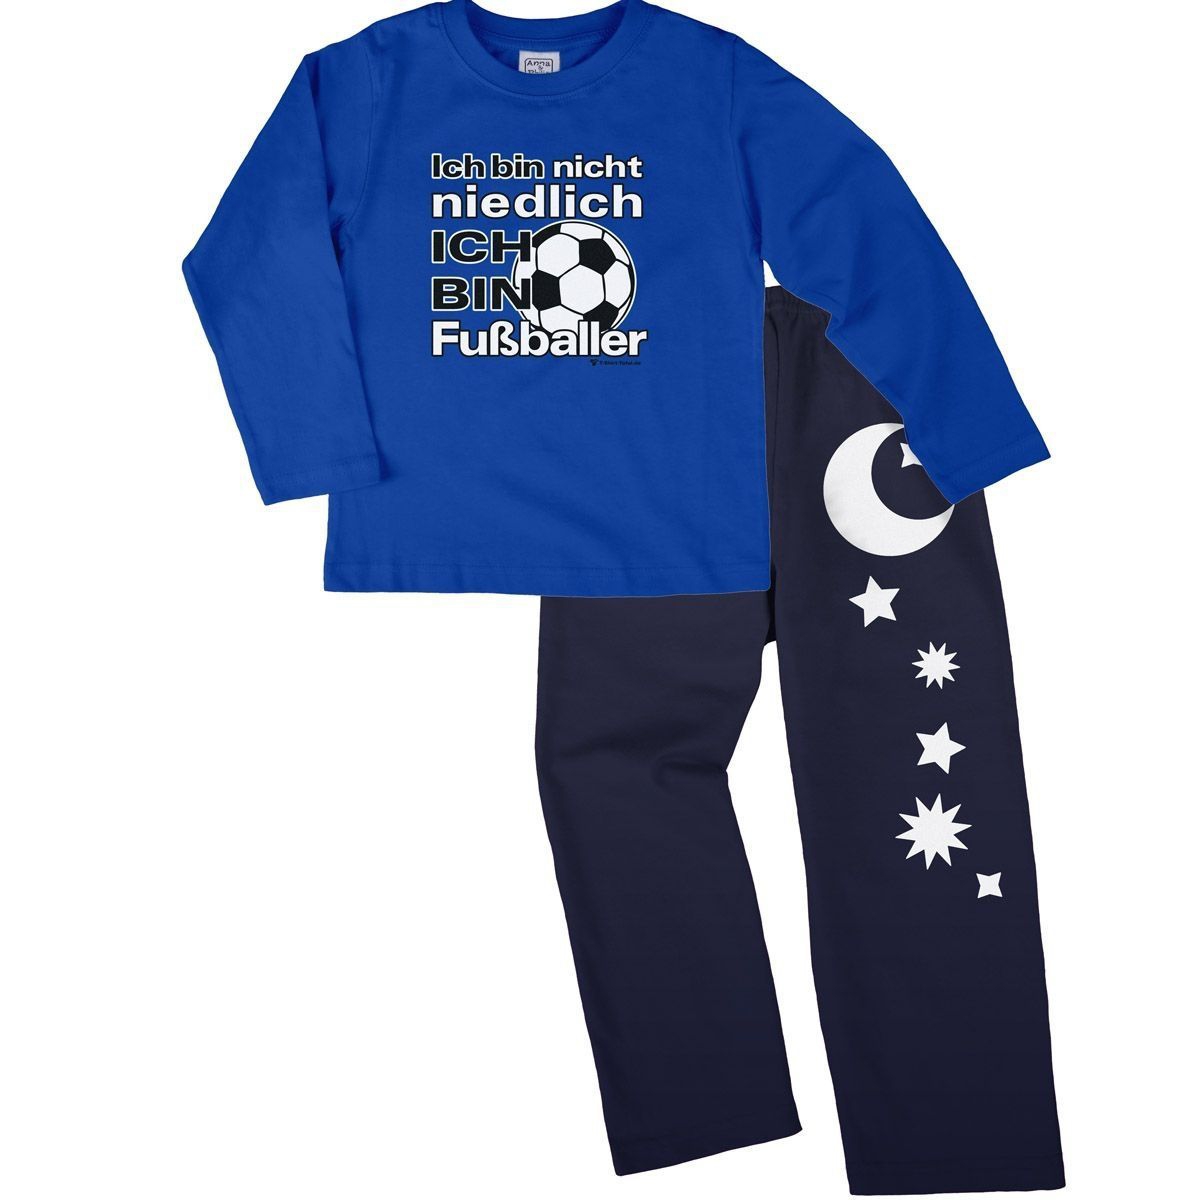 Niedlich Fußballer Pyjama Set royal / navy 110 / 116